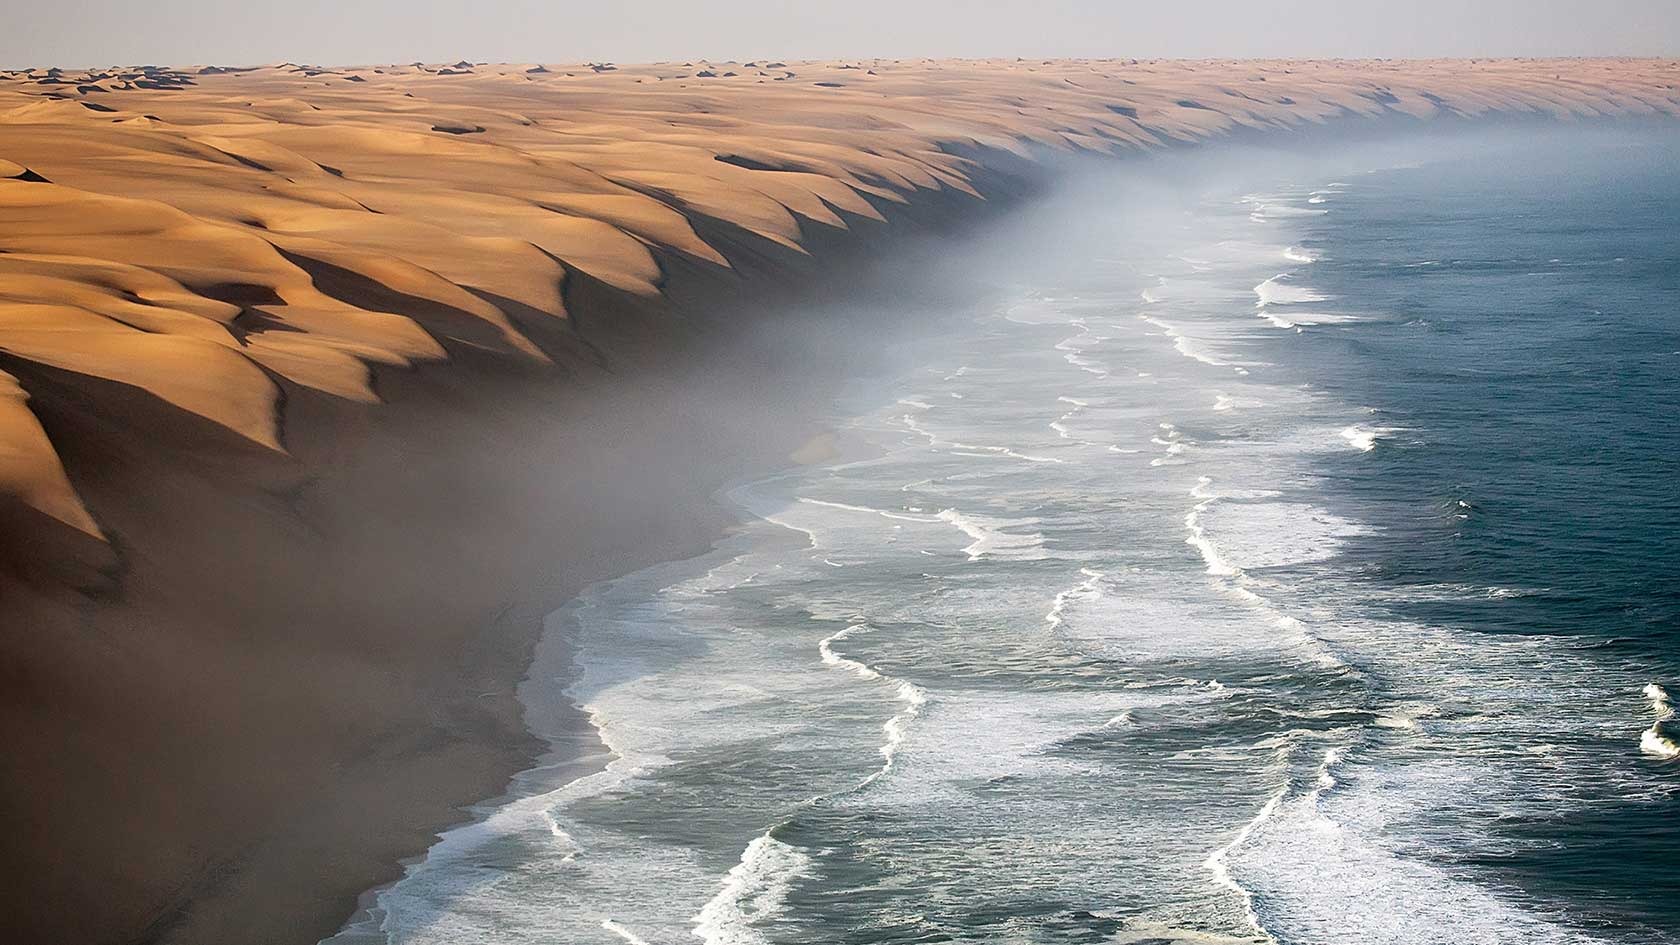 Where the Numib desert meets the ocean, I believe - meme